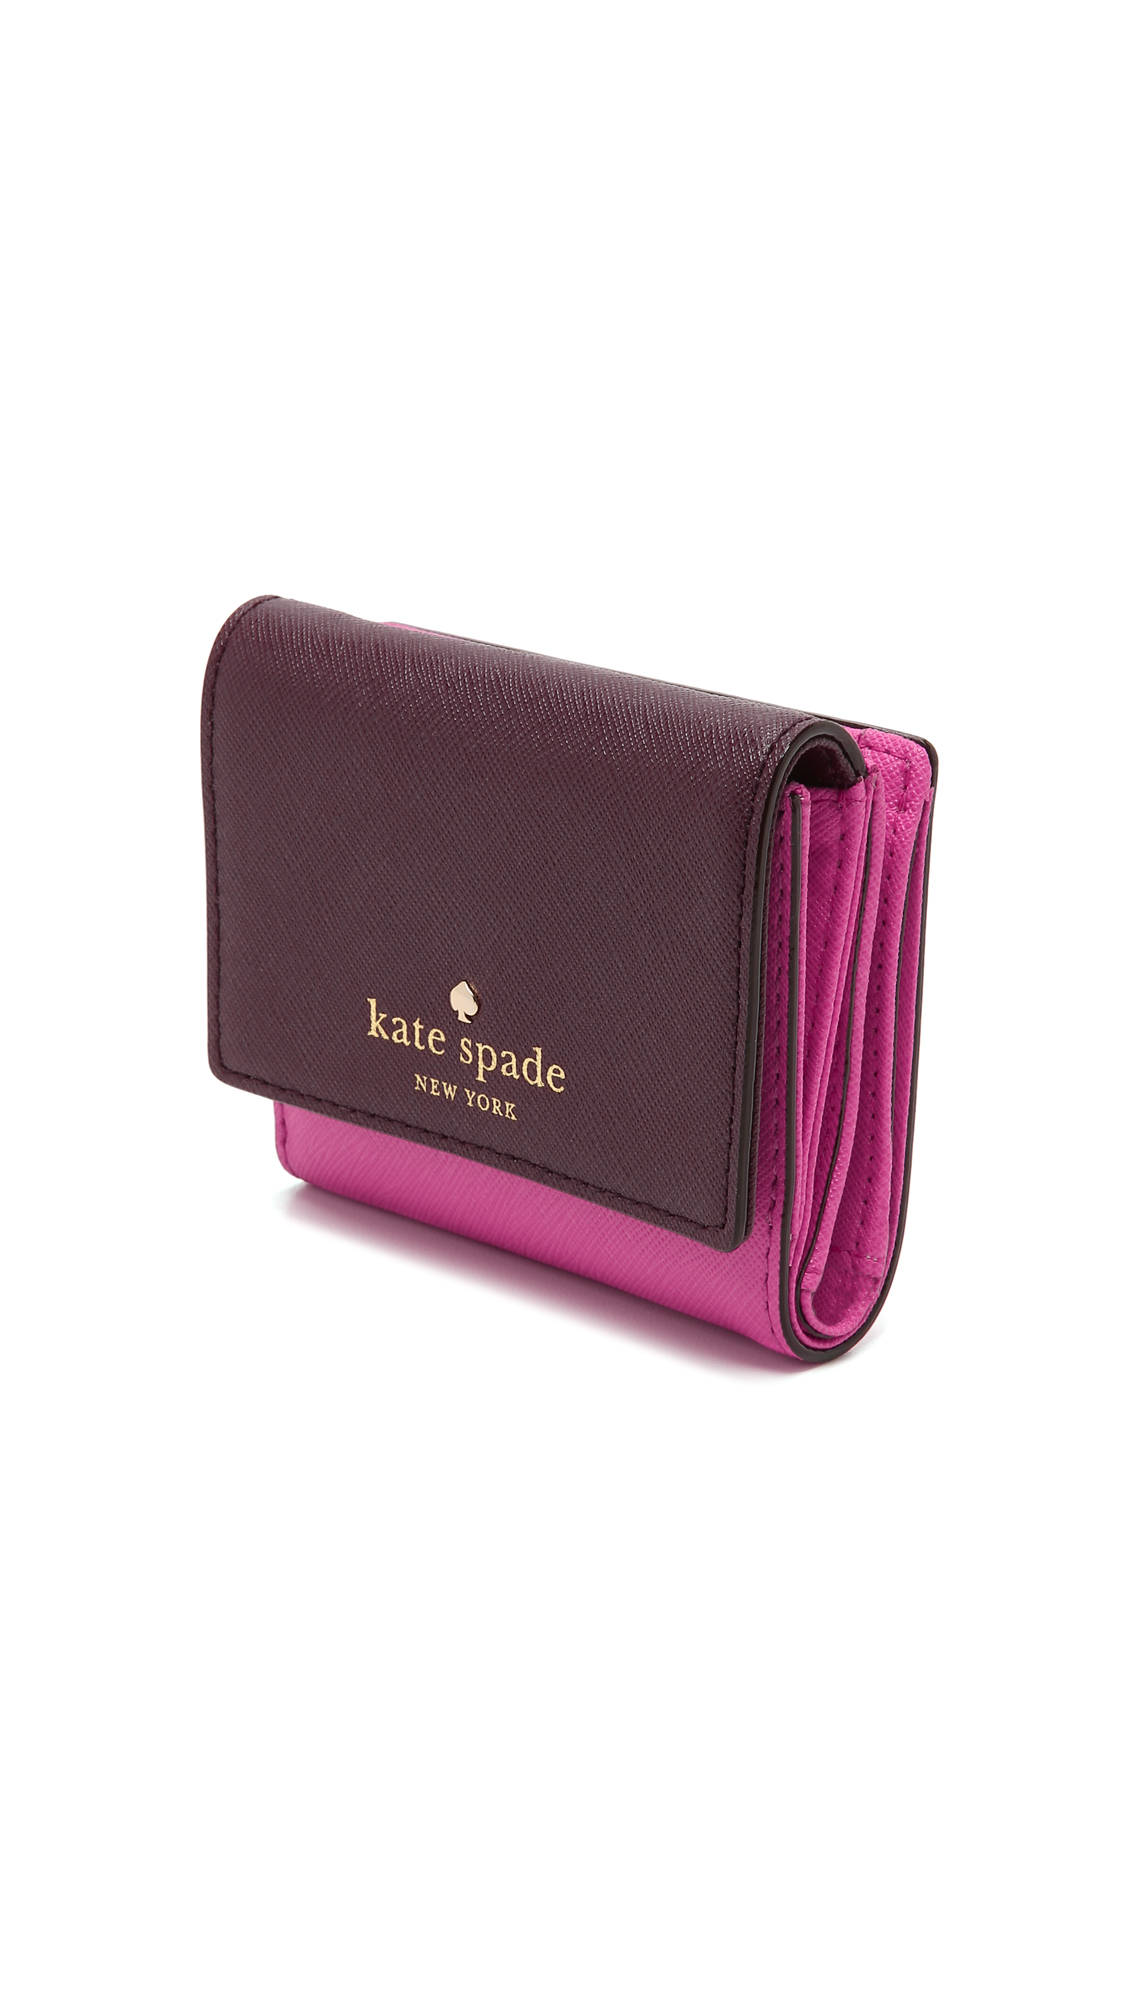 Lyst - Kate Spade New York Tavy Wallet - Mulled Wine/vivid Snapdragon in Purple